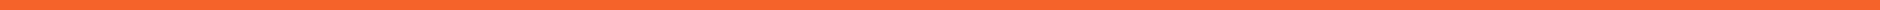 OG-Orange-Divider-Bar.jpg